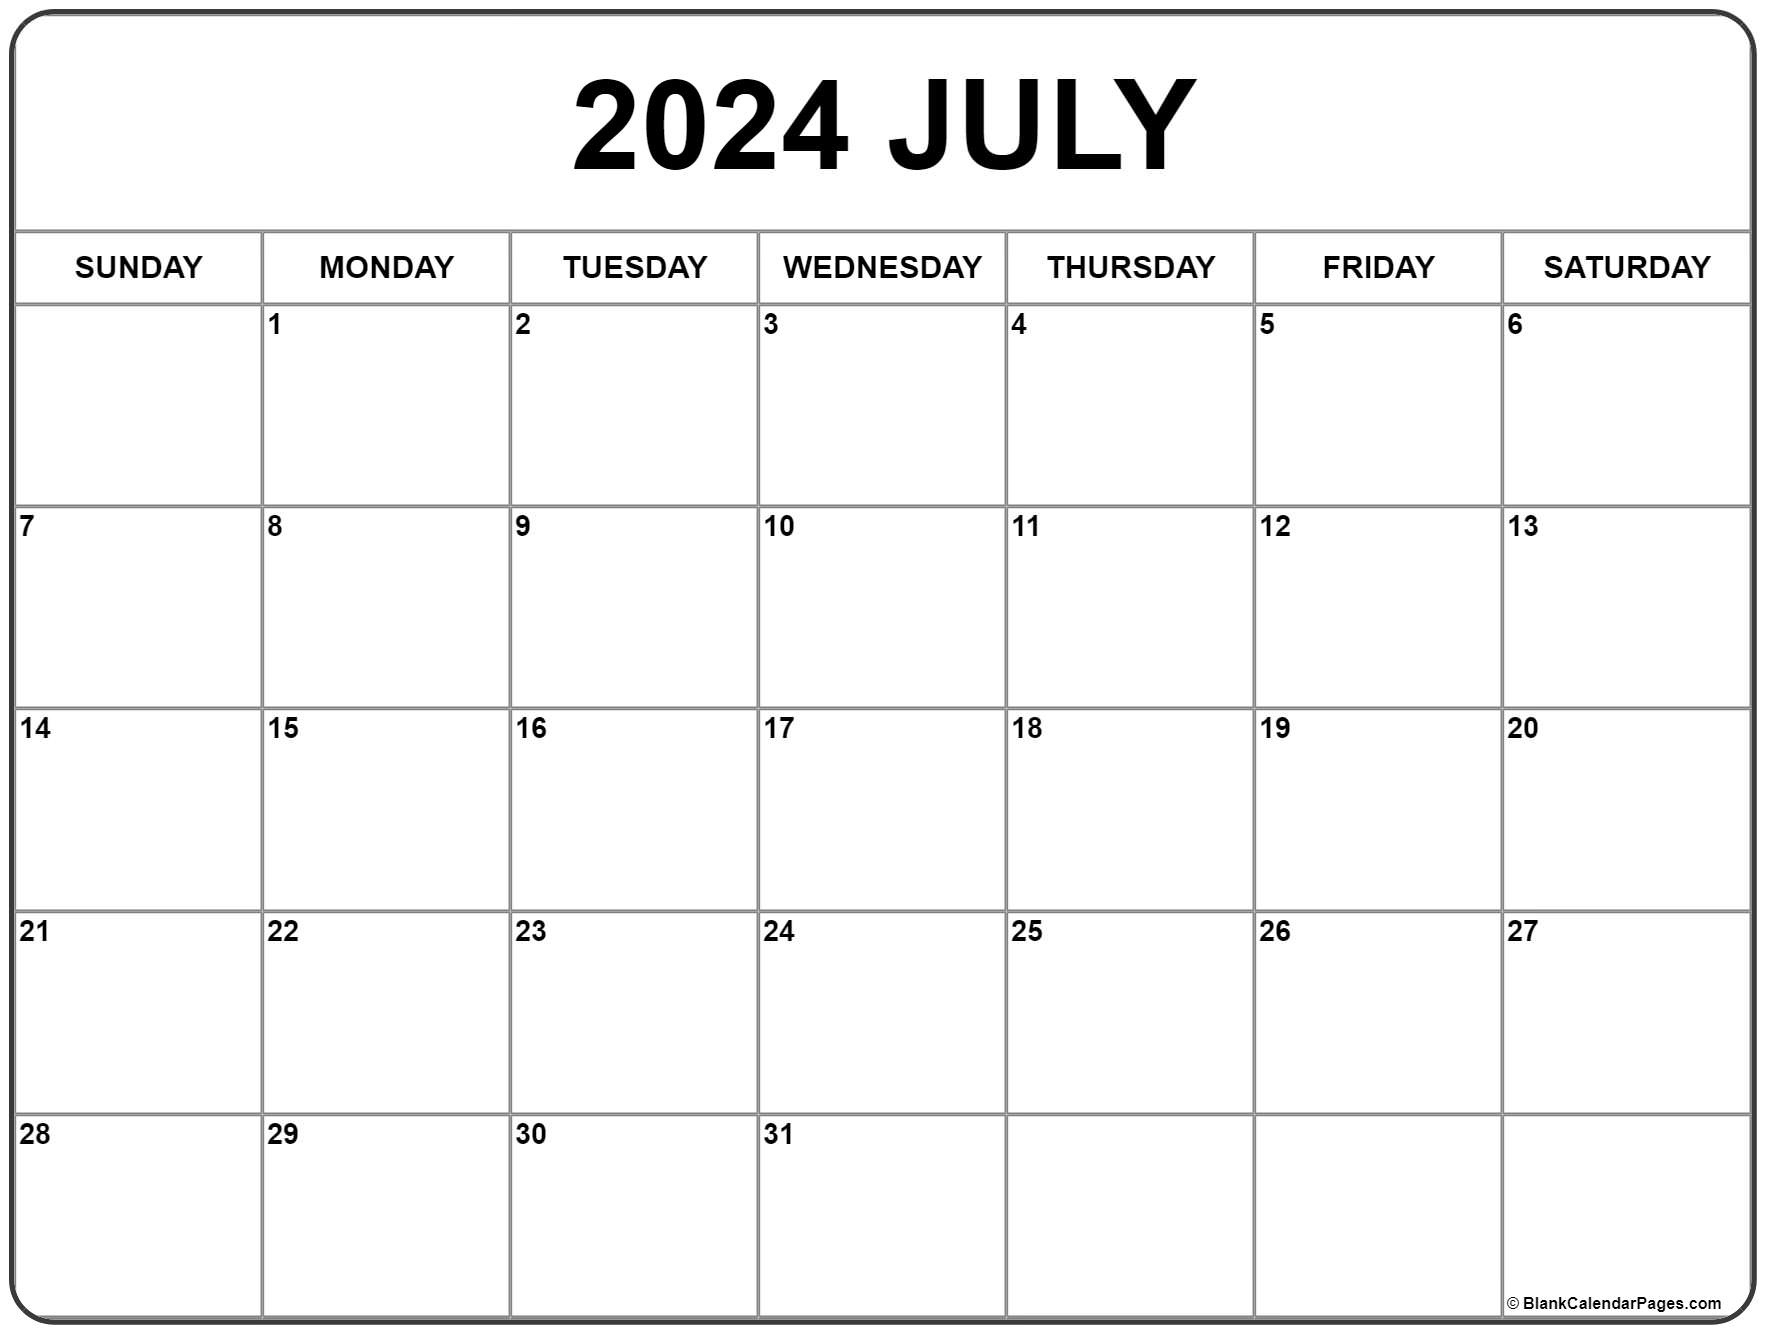 July 2024 Calendar | Free Printable Calendar regarding Open My Calendar For July 2024